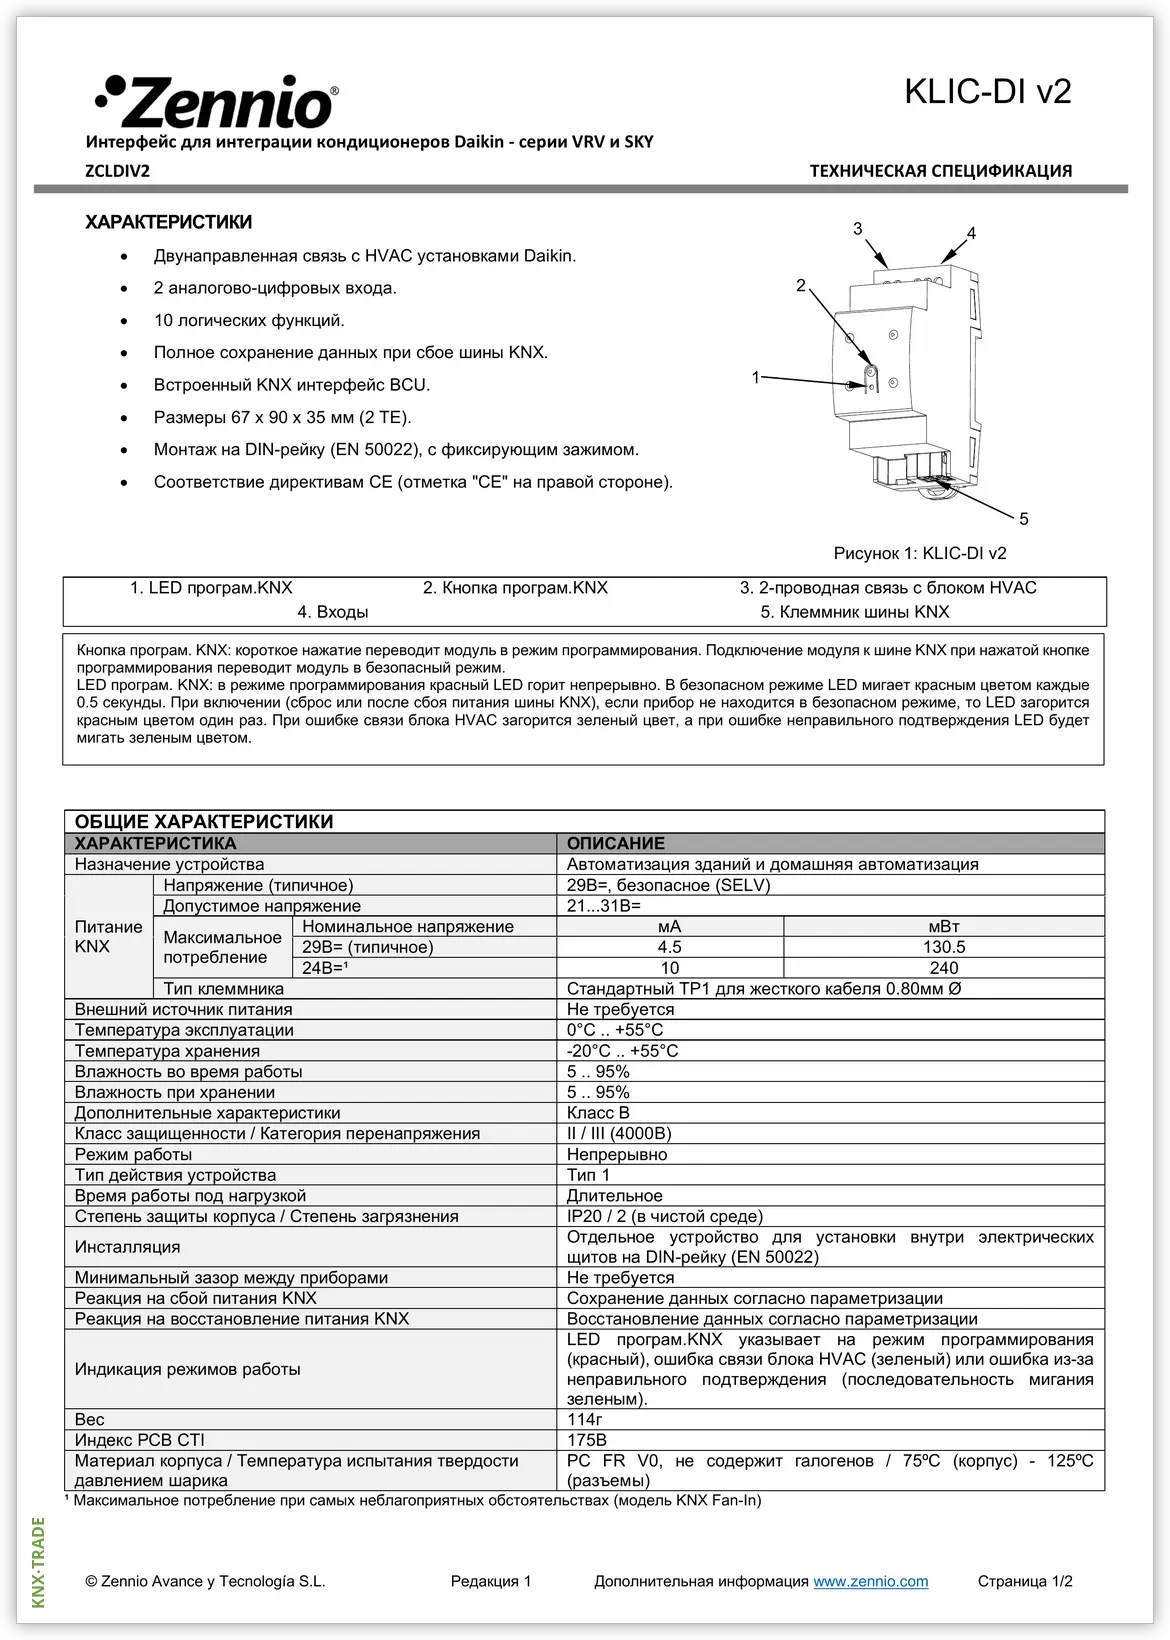 Datasheet (1) Zennio [ZCLDIV2] KLIC-DI v2 / Шлюз KNX-Daikin Industrial SKY и VRV